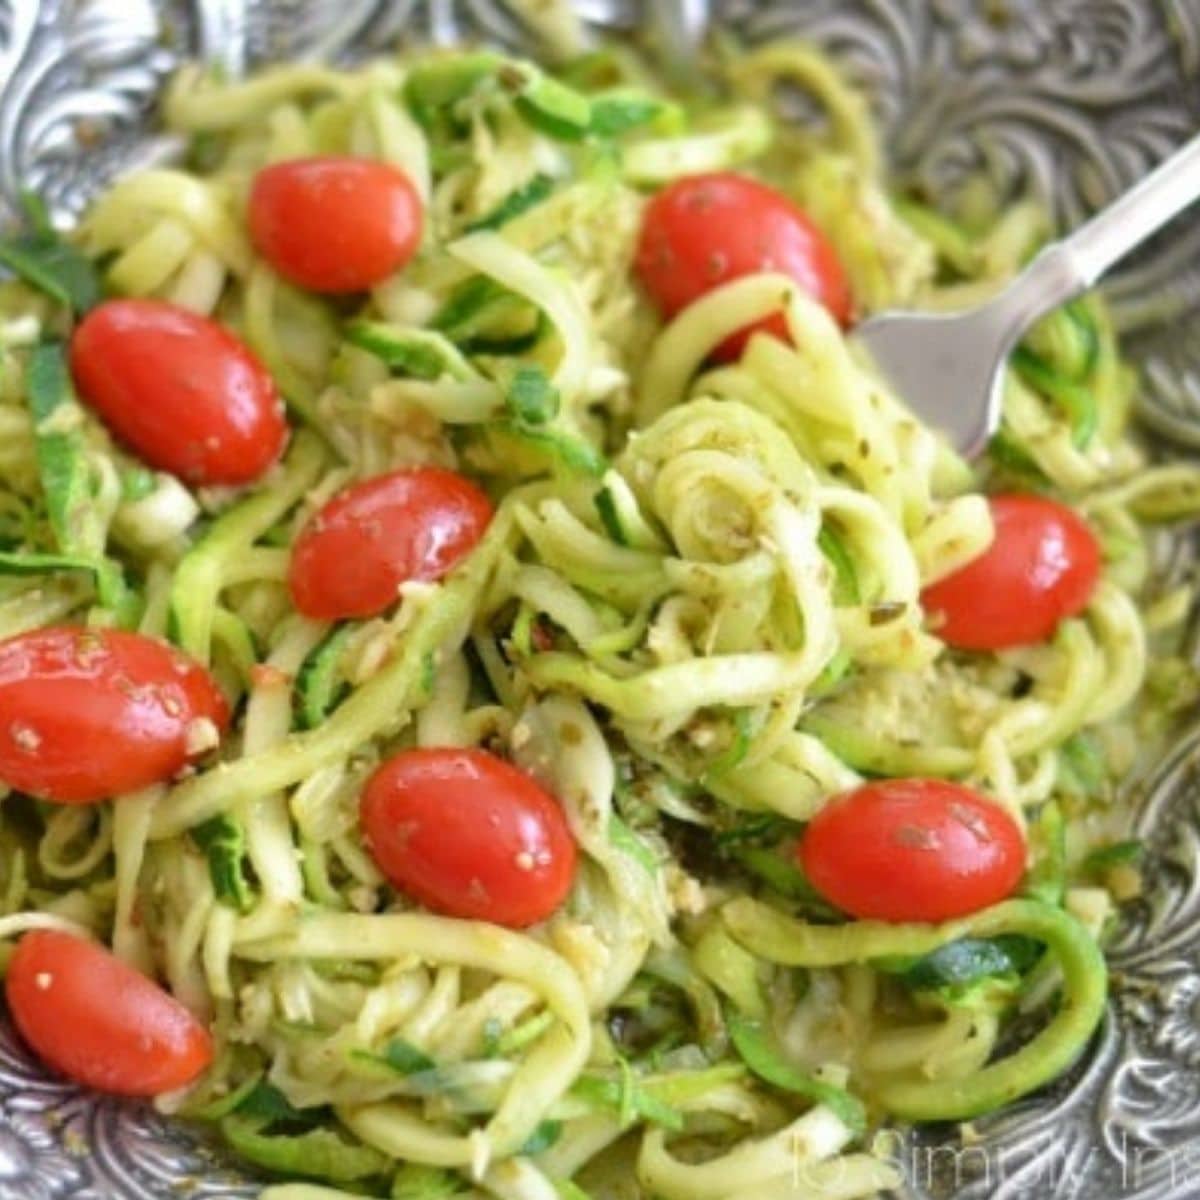 https://www.tosimplyinspire.com/wp-content/uploads/2020/05/pesto-zucchini-noodles-1200.jpeg